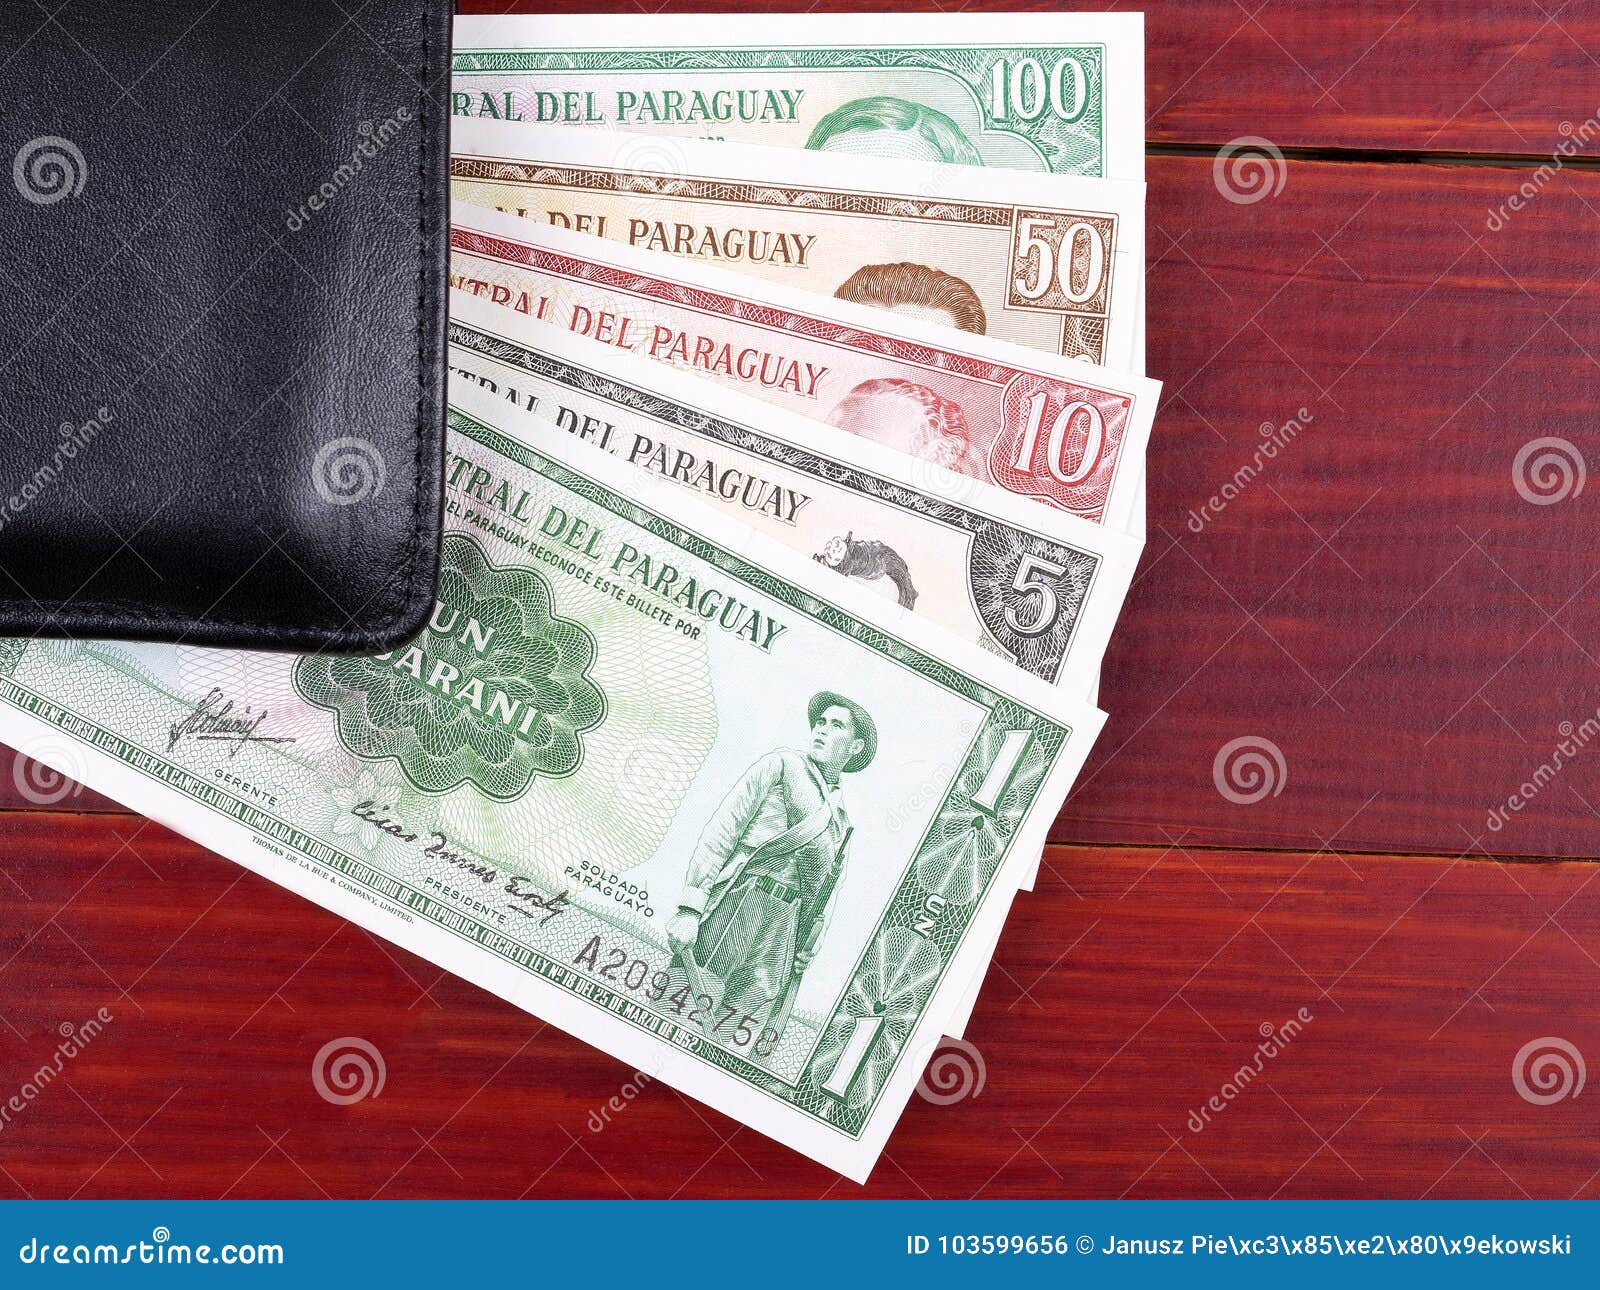 paraguayan money in the black wallet